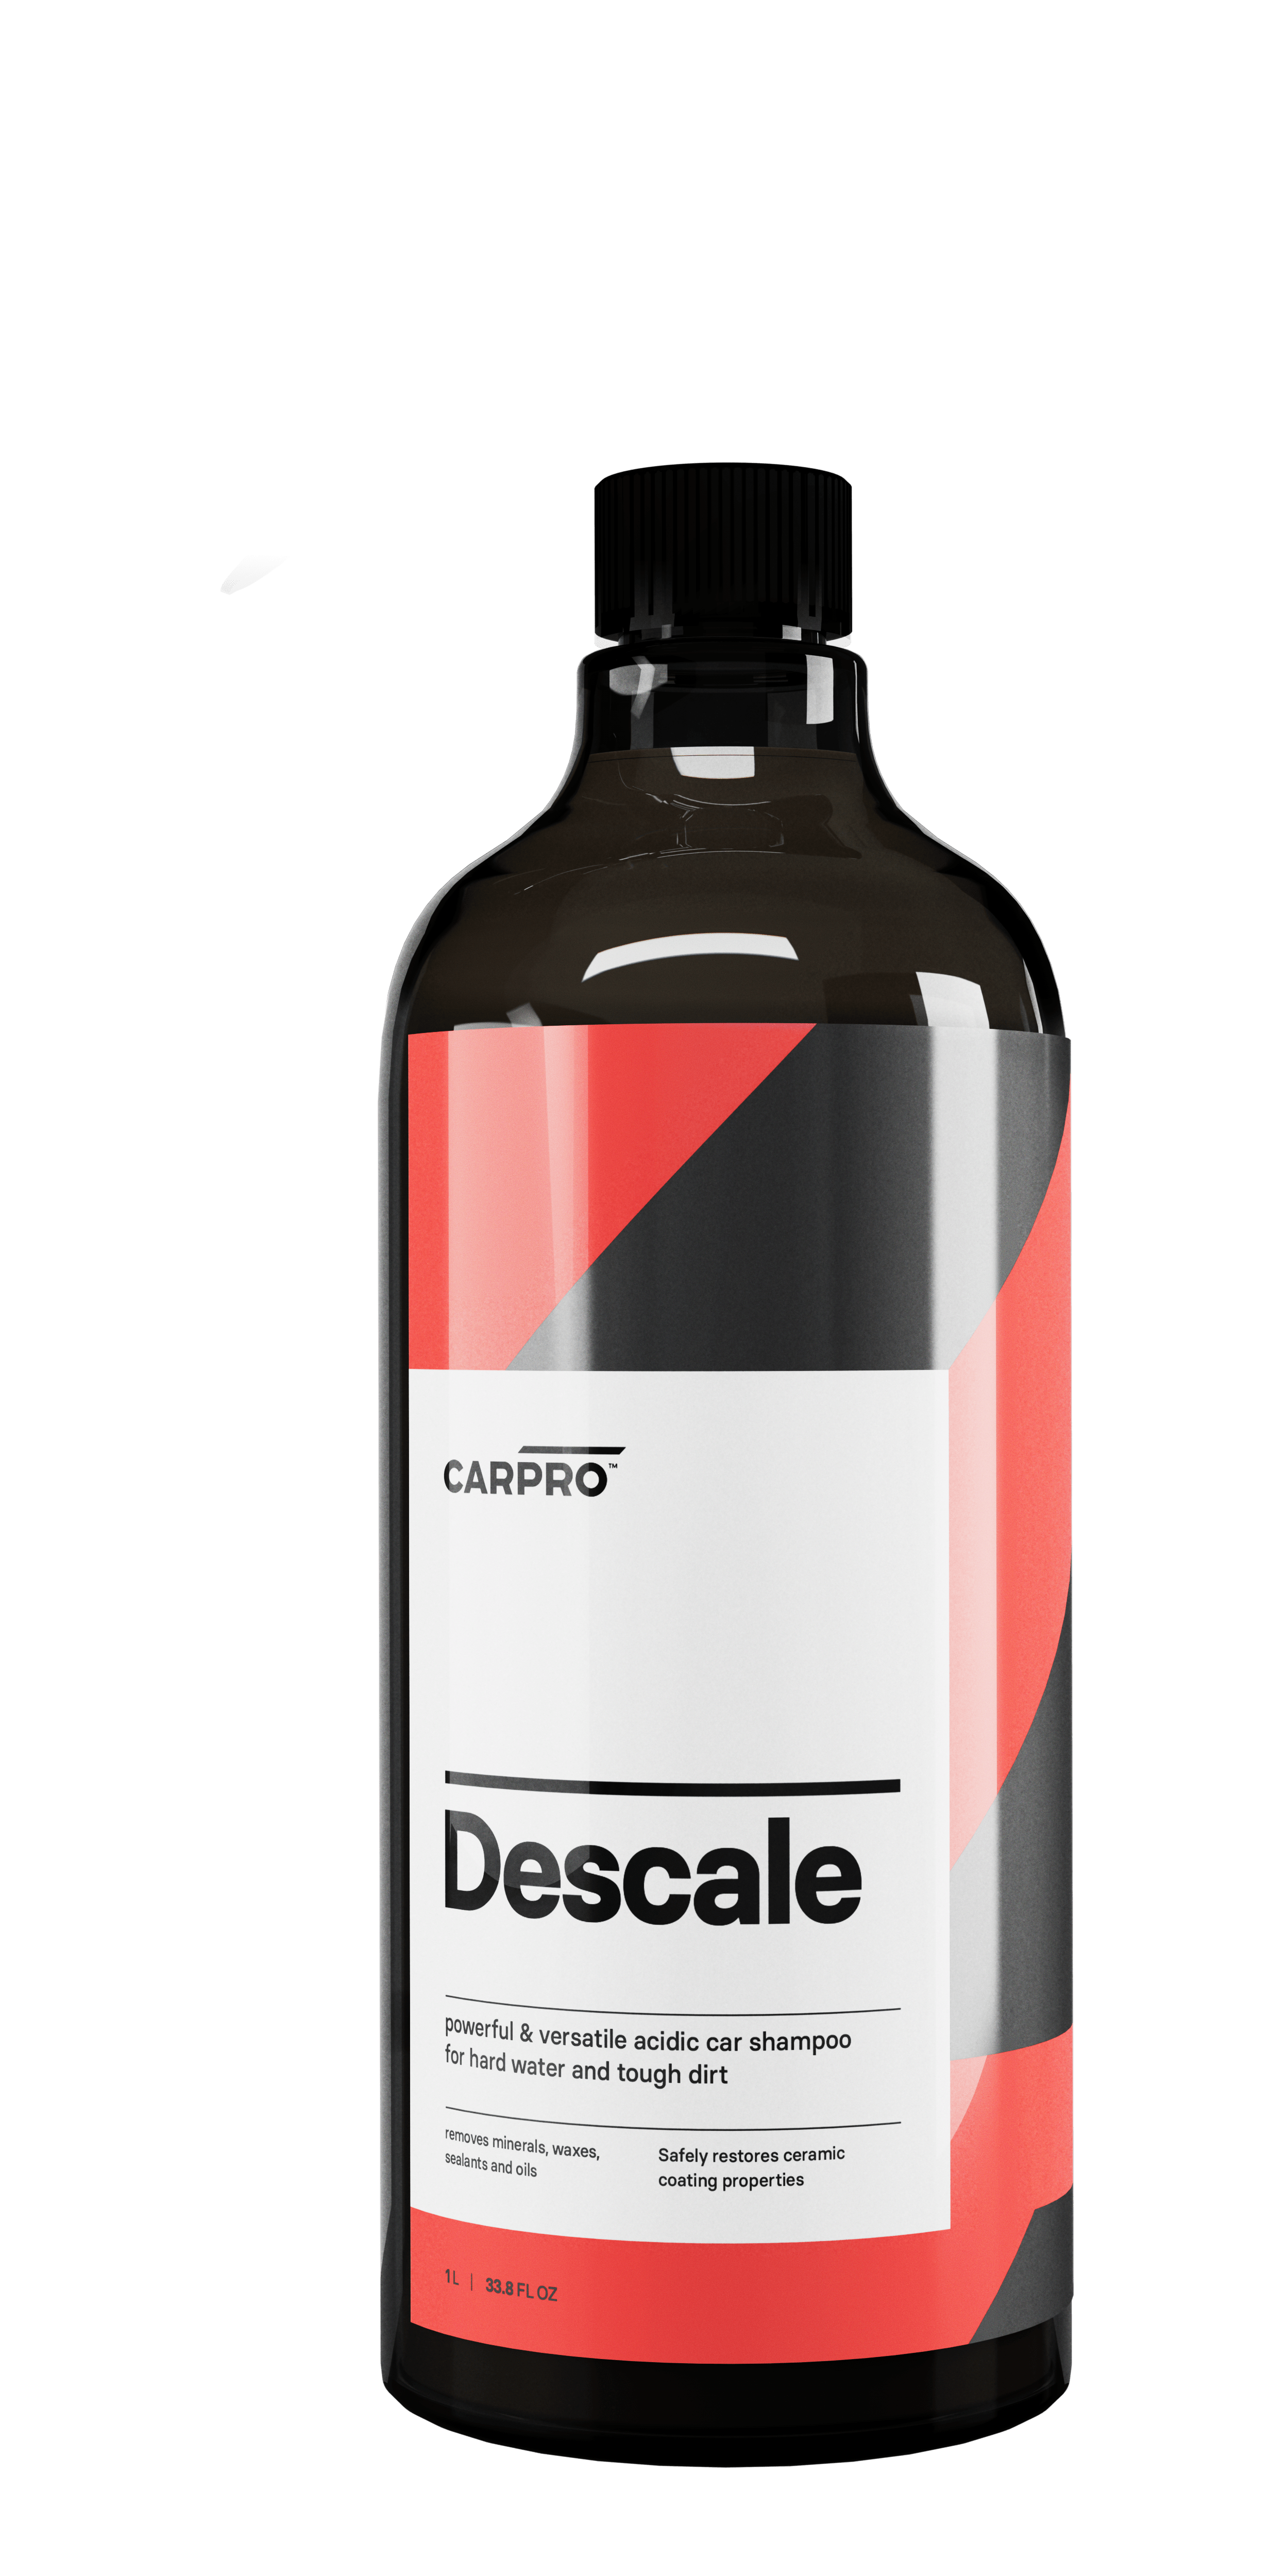 CARPRO Descale (1L) - Powerful & Versatile Acidic Car Shampoo for Hard  Water and Tough Dirt